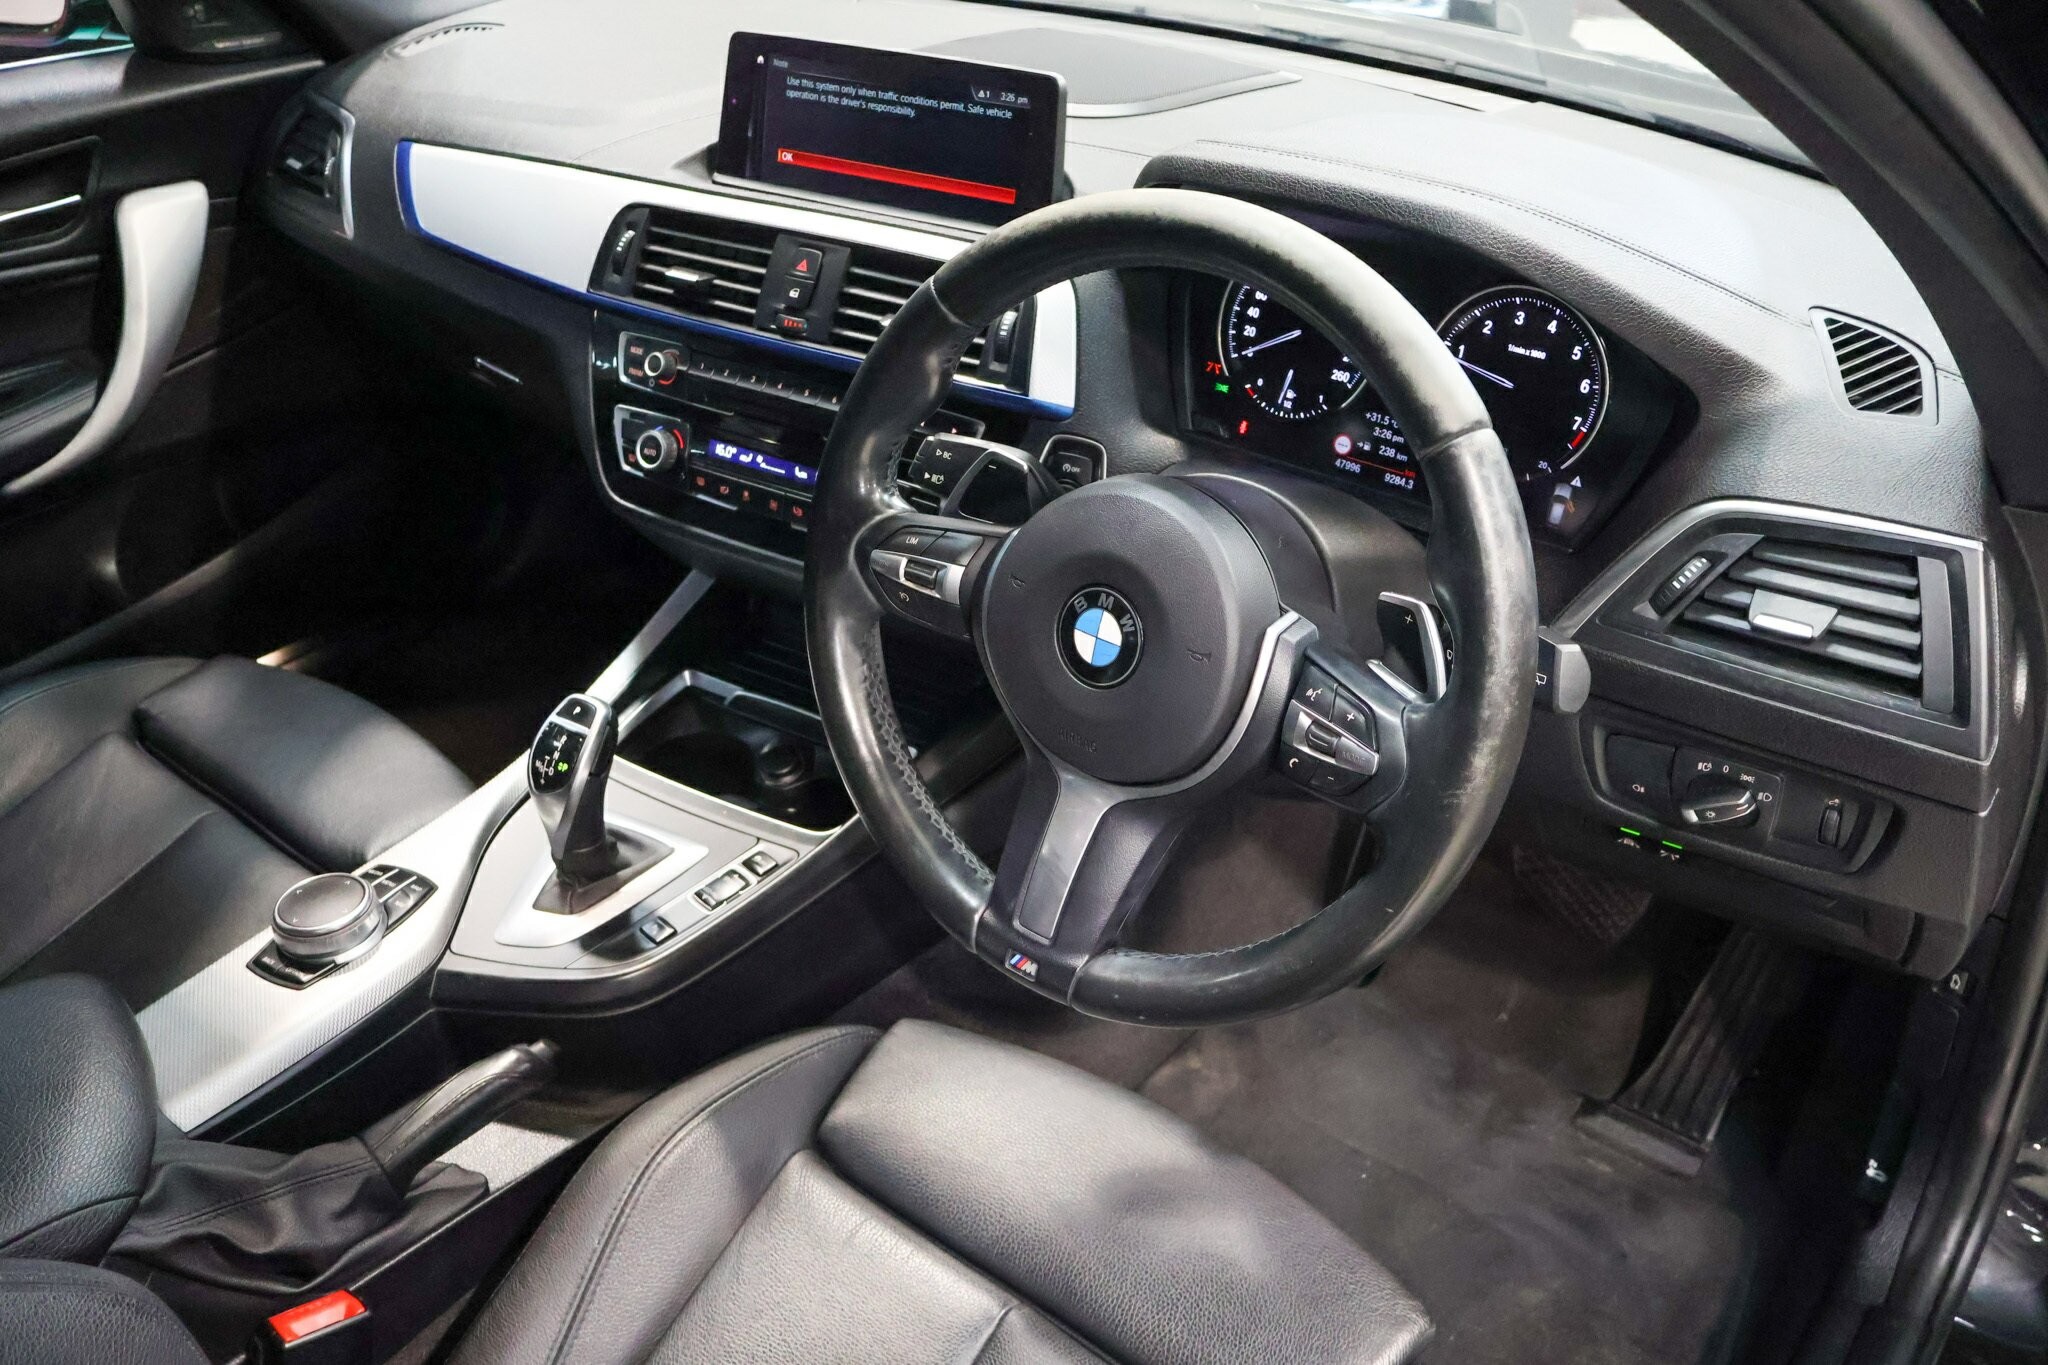 BMW 1 Series image 4